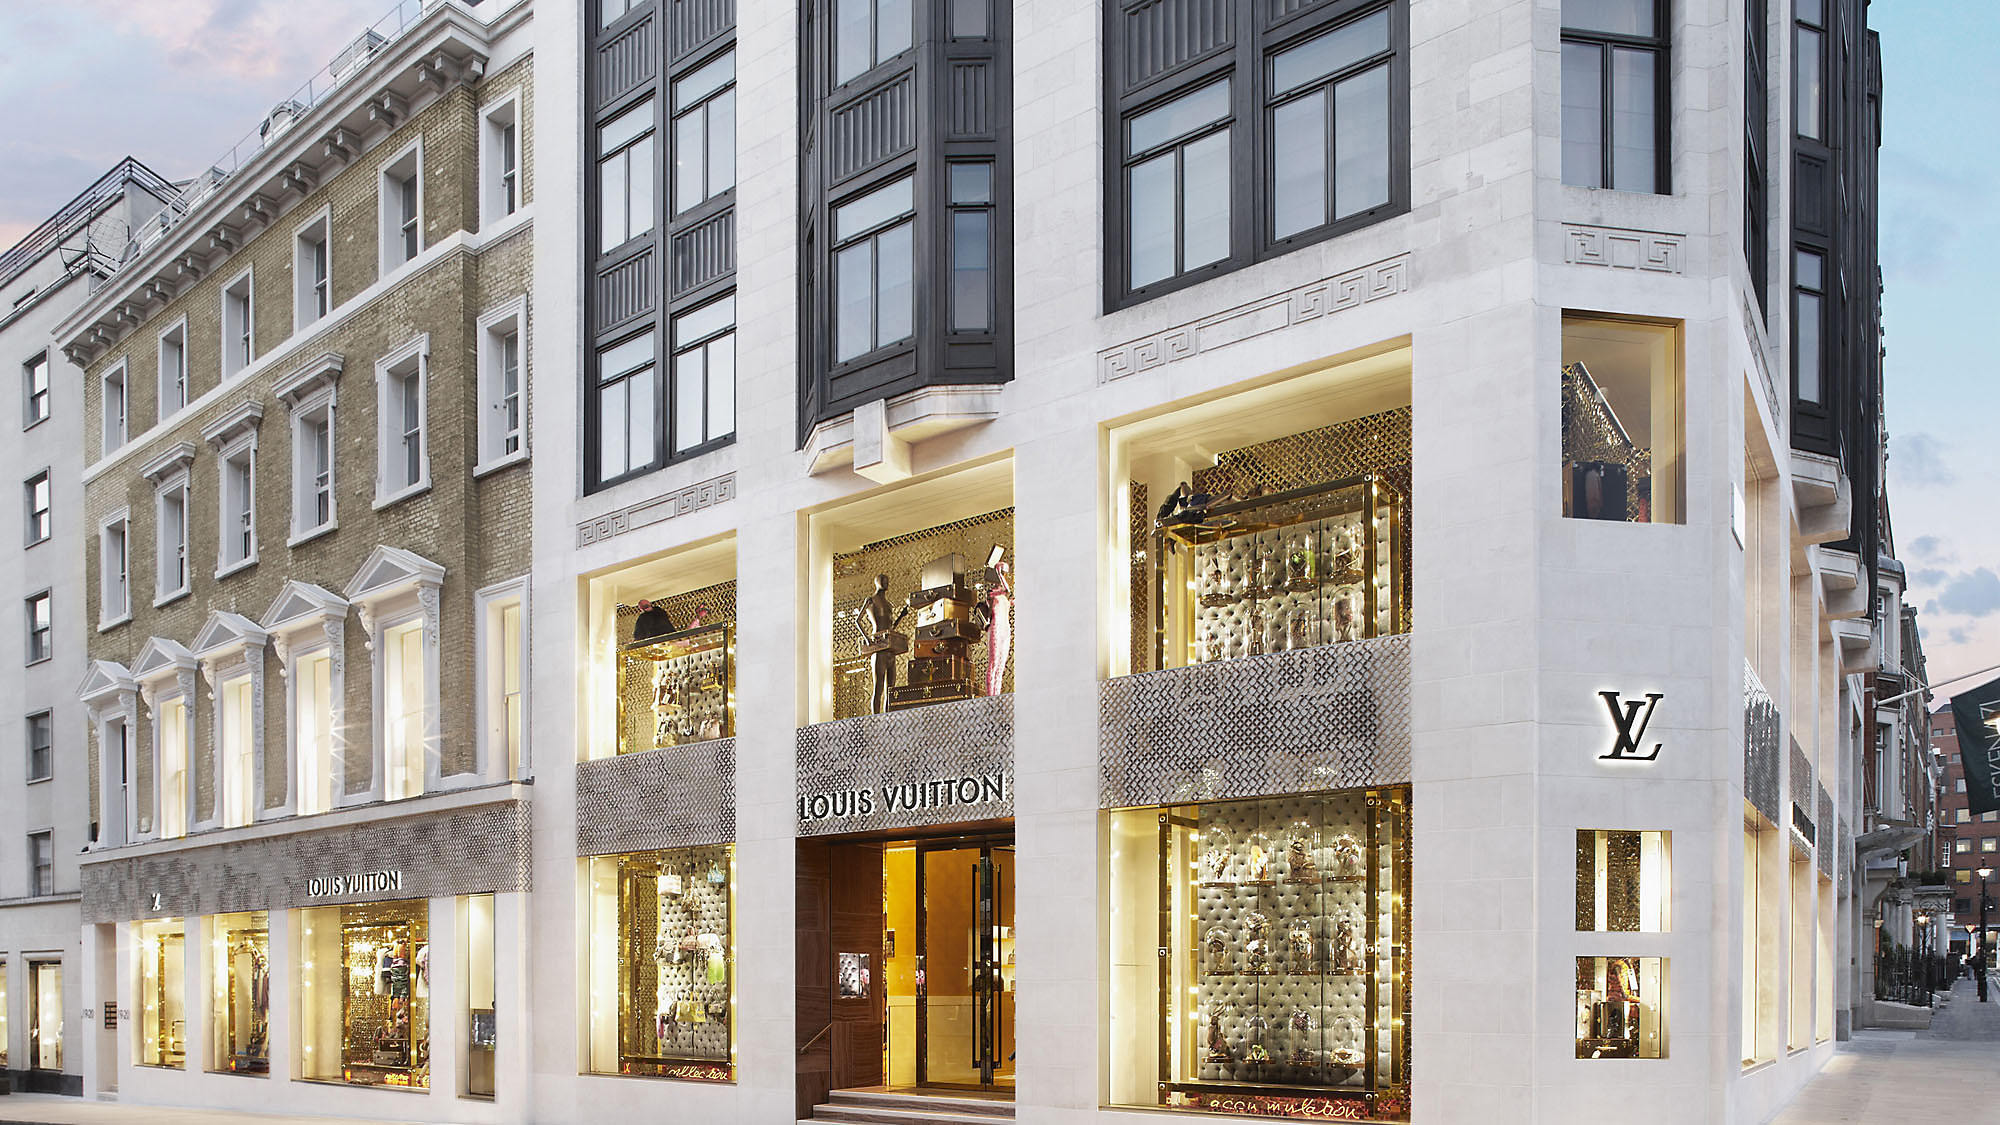 Peter Marino on Instagram: Louis Vuitton New Bond Street - winner